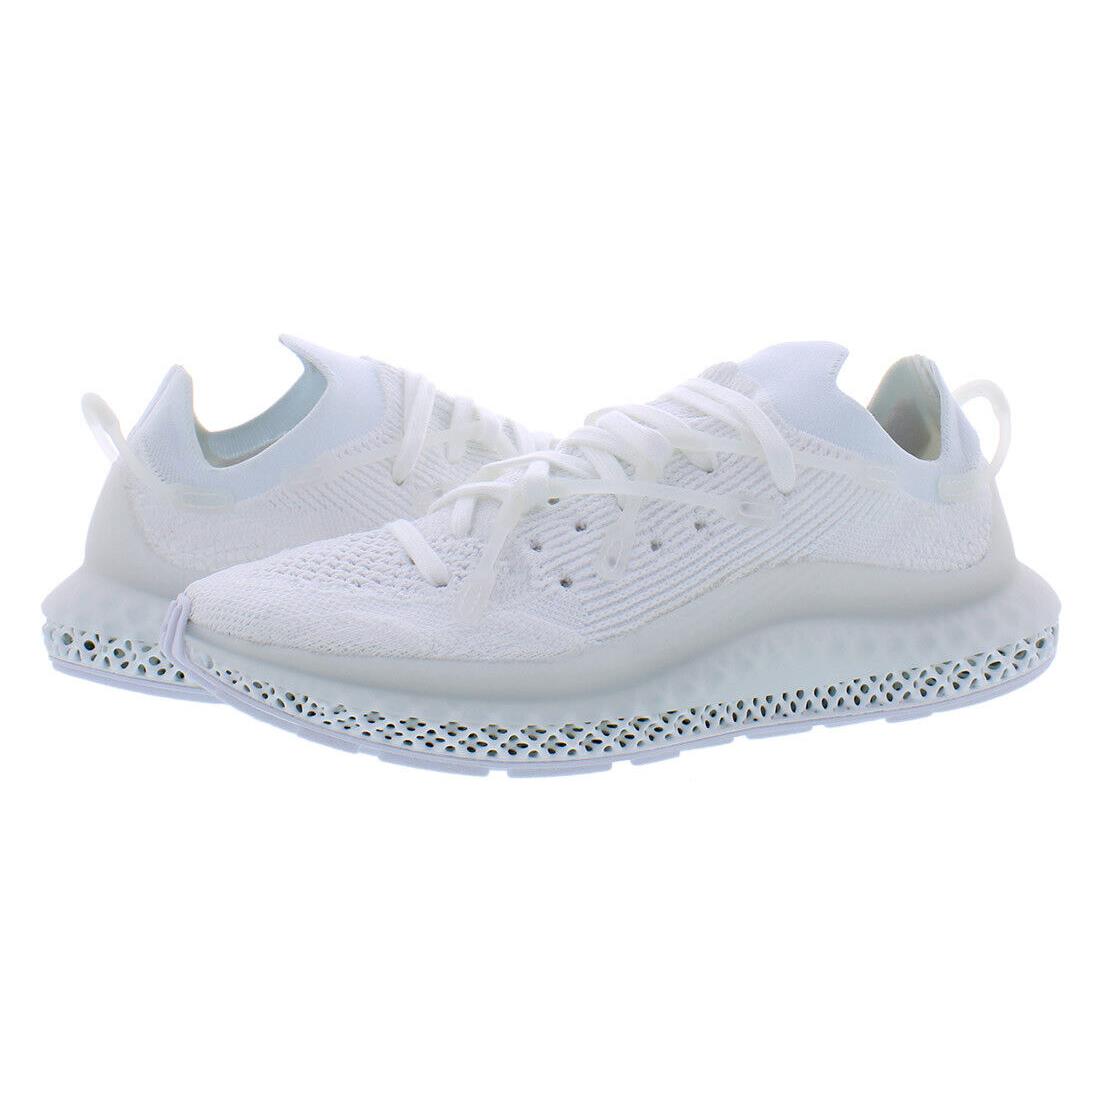 Adidas 4D Fusio Mens Shoes Size 11.5 Color: White - White, Main: White